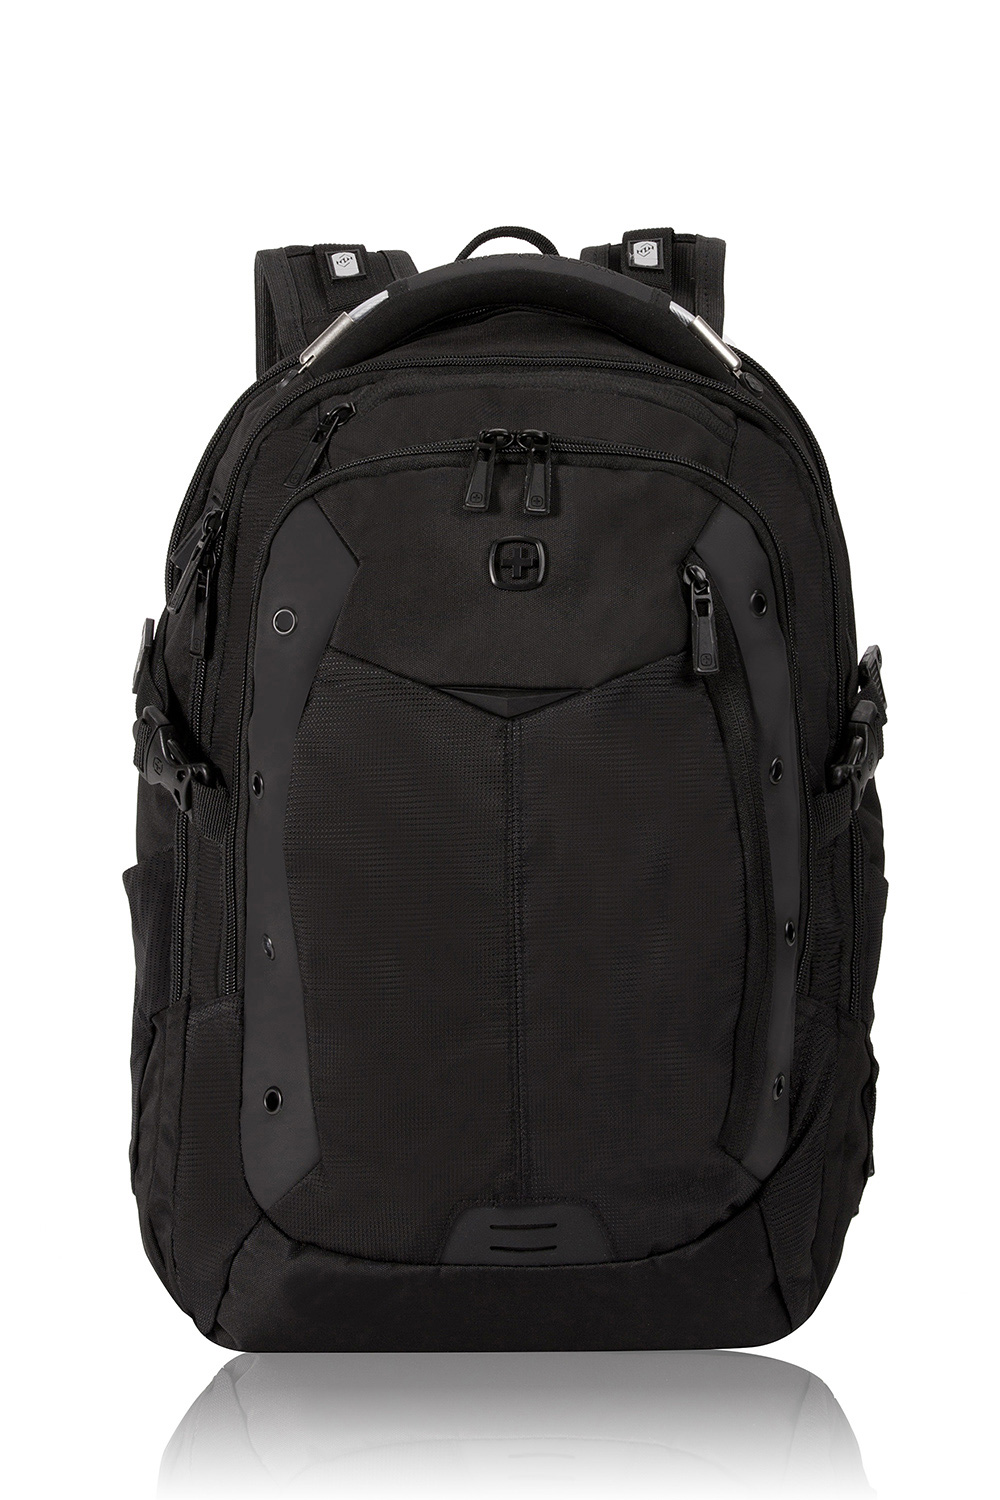 15.6/' Laptop Swiss Gear Backpack Computer School Bag Men‘s Large Travel Backpack